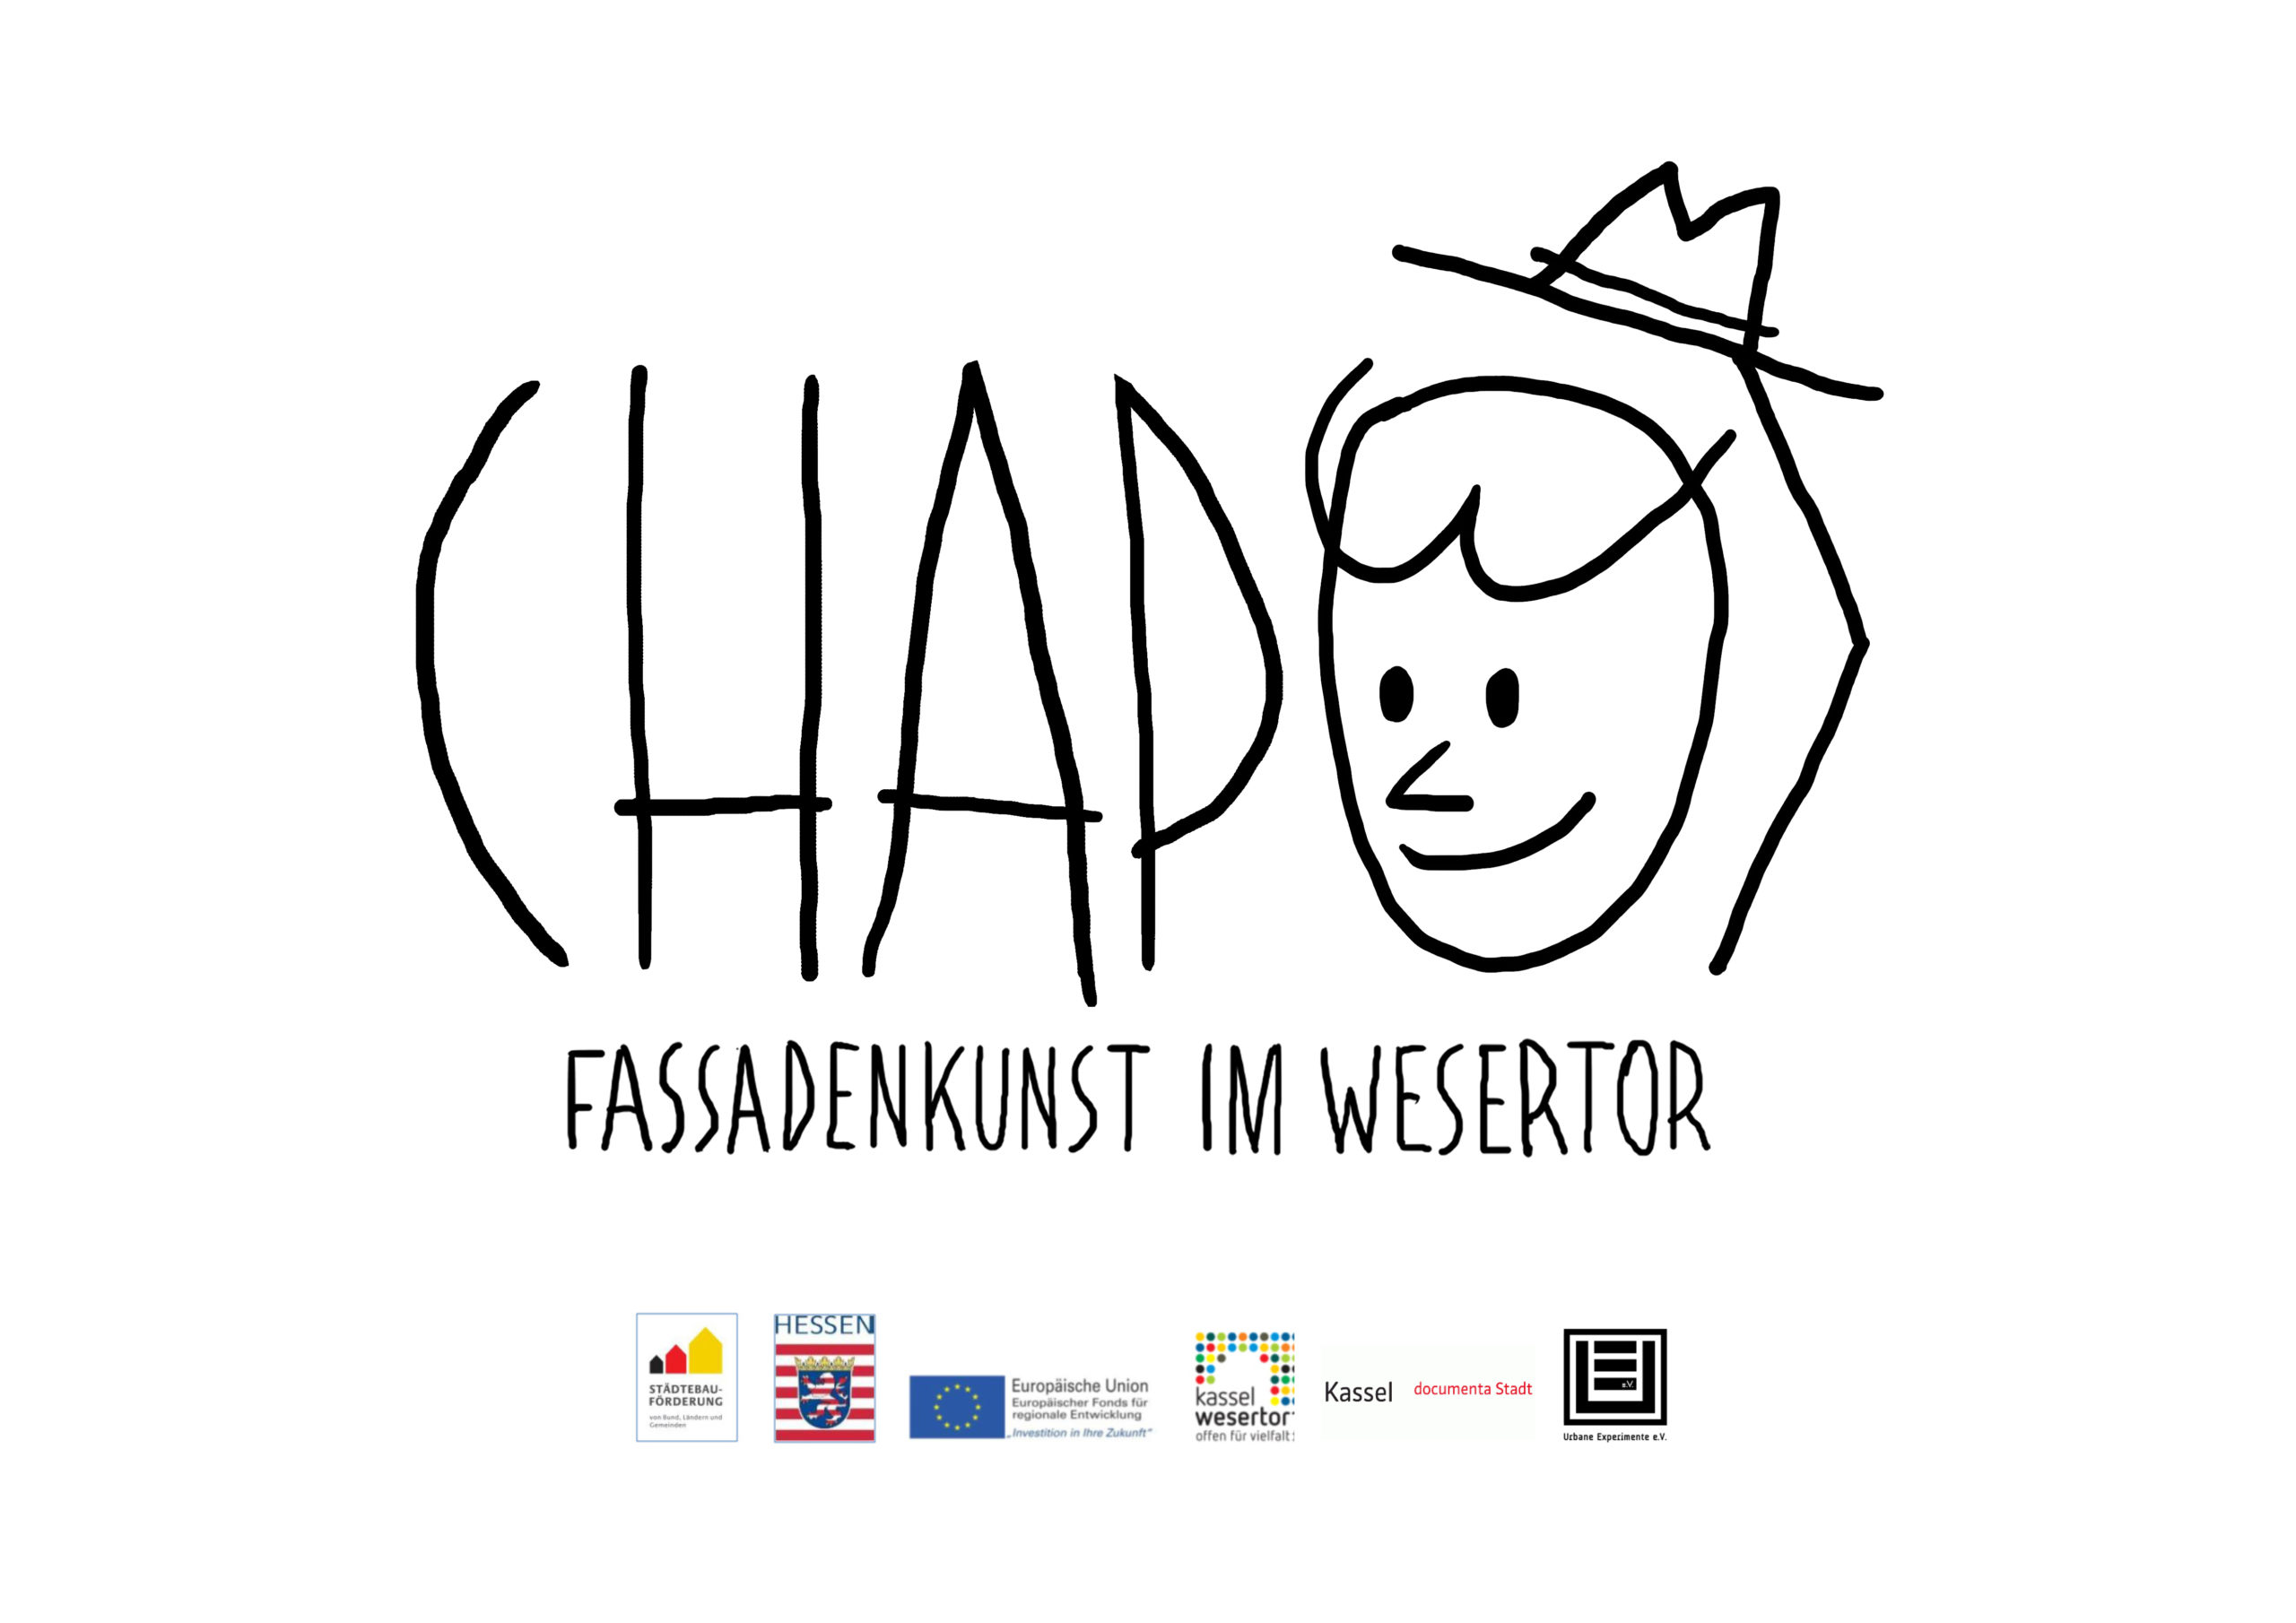 CHAPO – Fassadenkunst im Wesertor